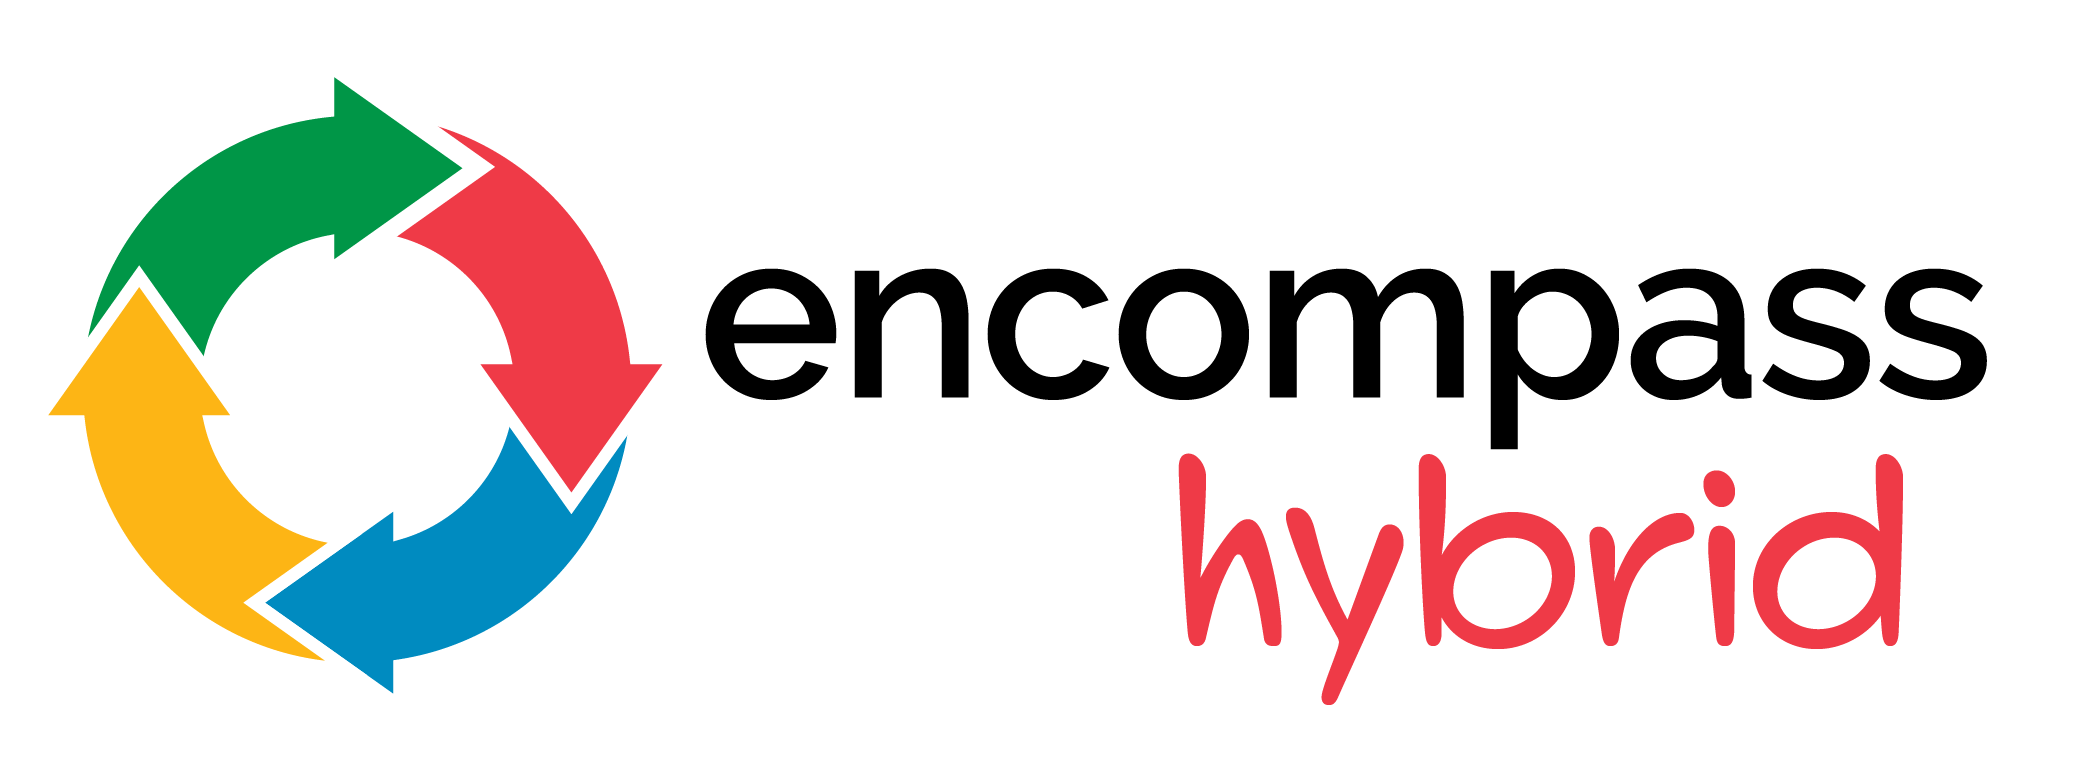 encompass-hybrid-logo-final-high-res_final.png